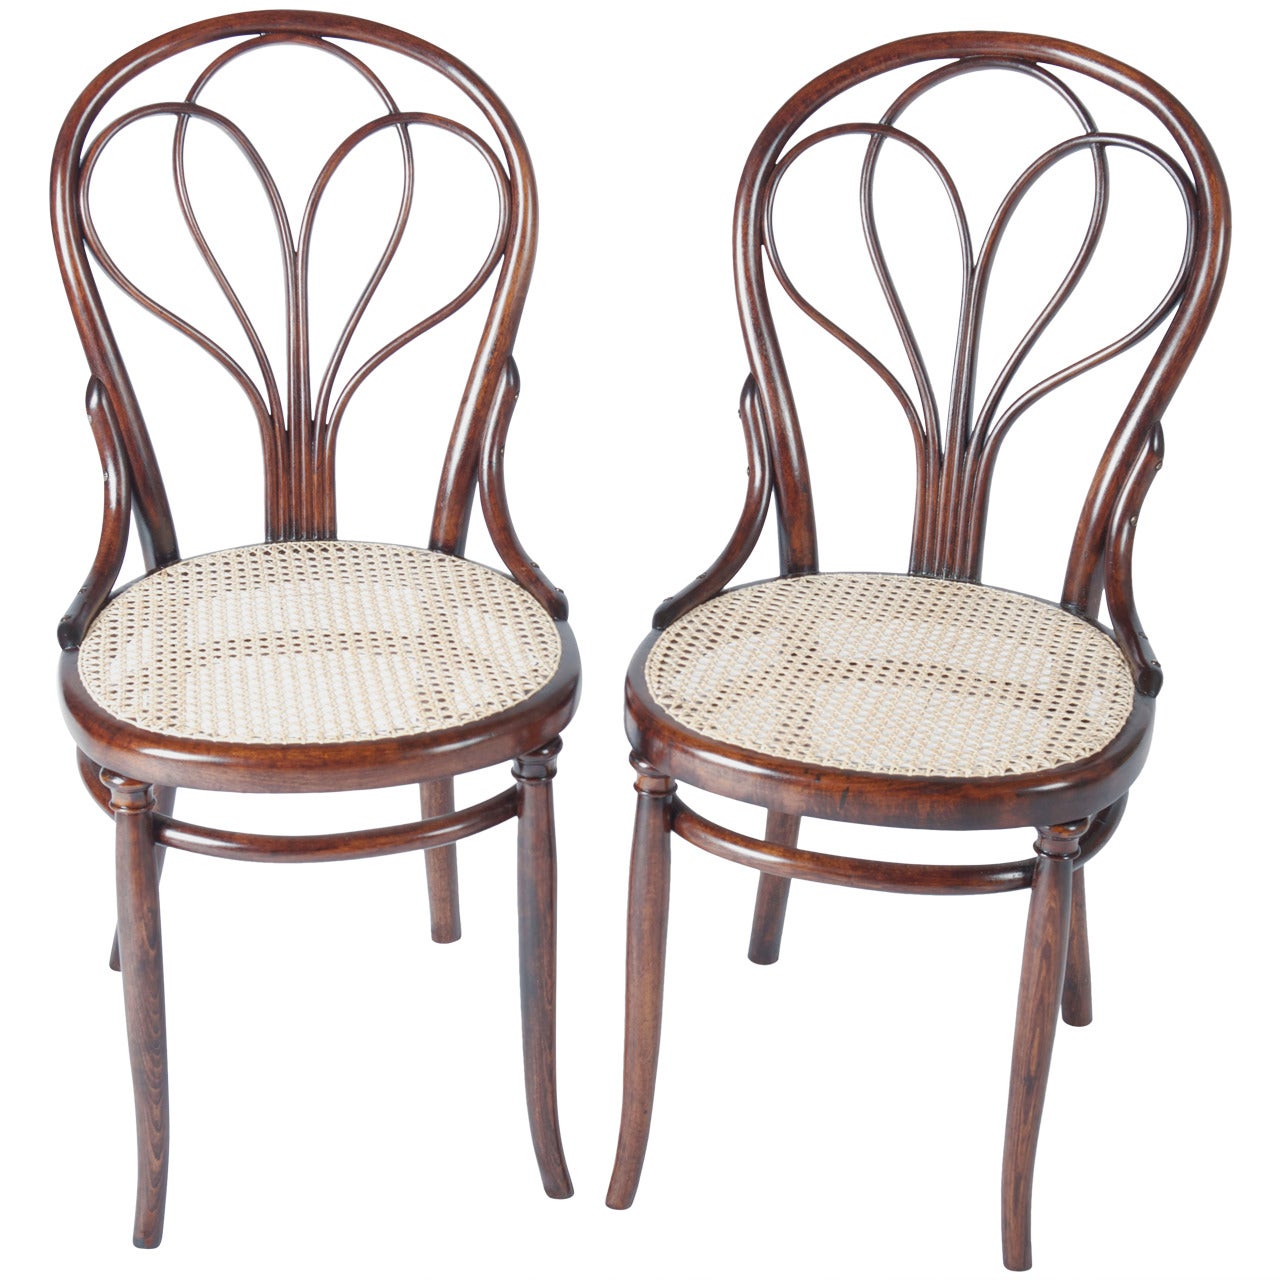 Pair of Thonet No. 25 Chairs